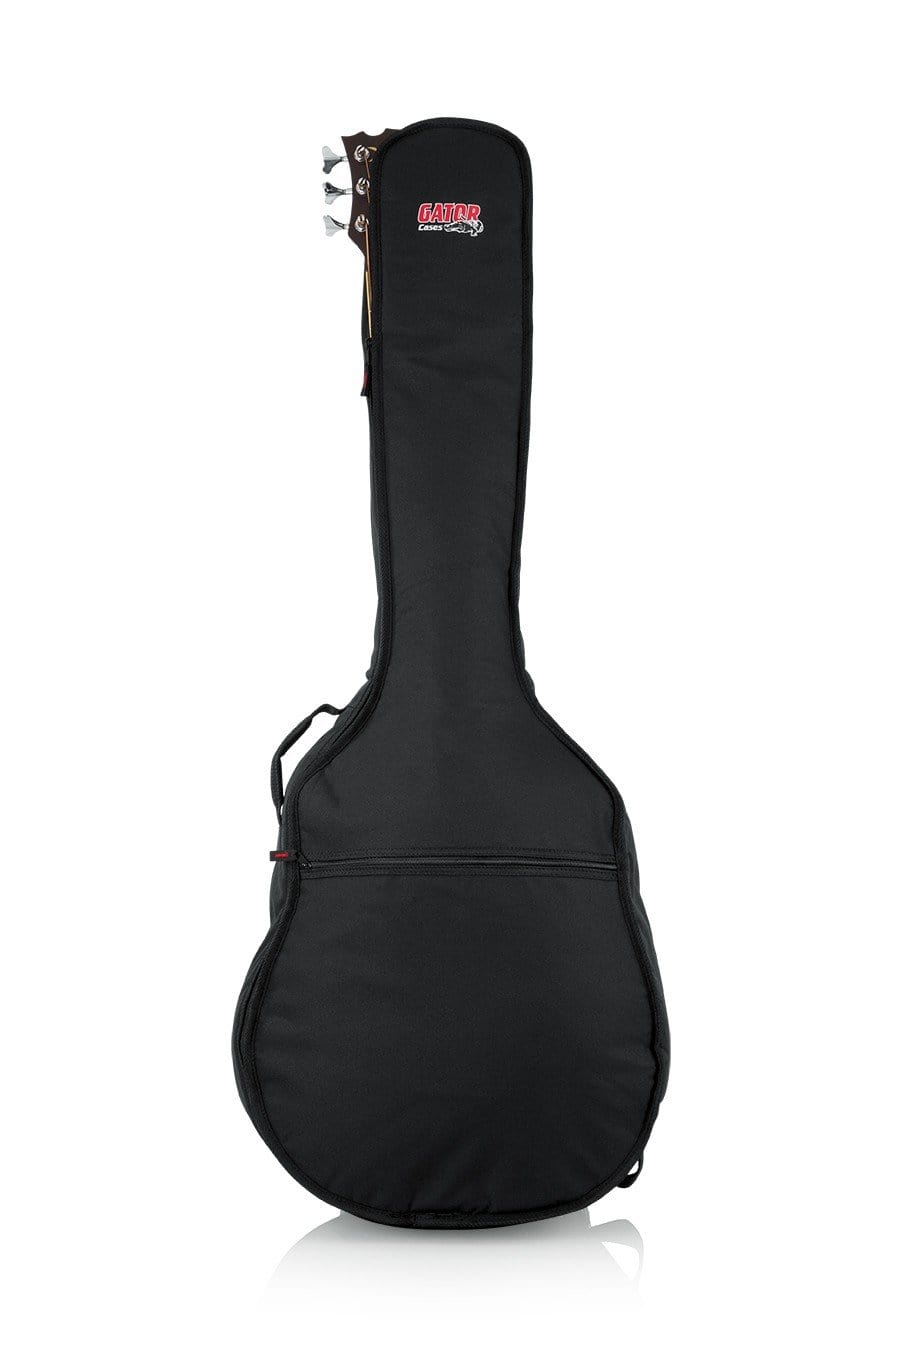 Gator Cases and Gigbags Gator Acoustic Bass Guitar Gig Bag